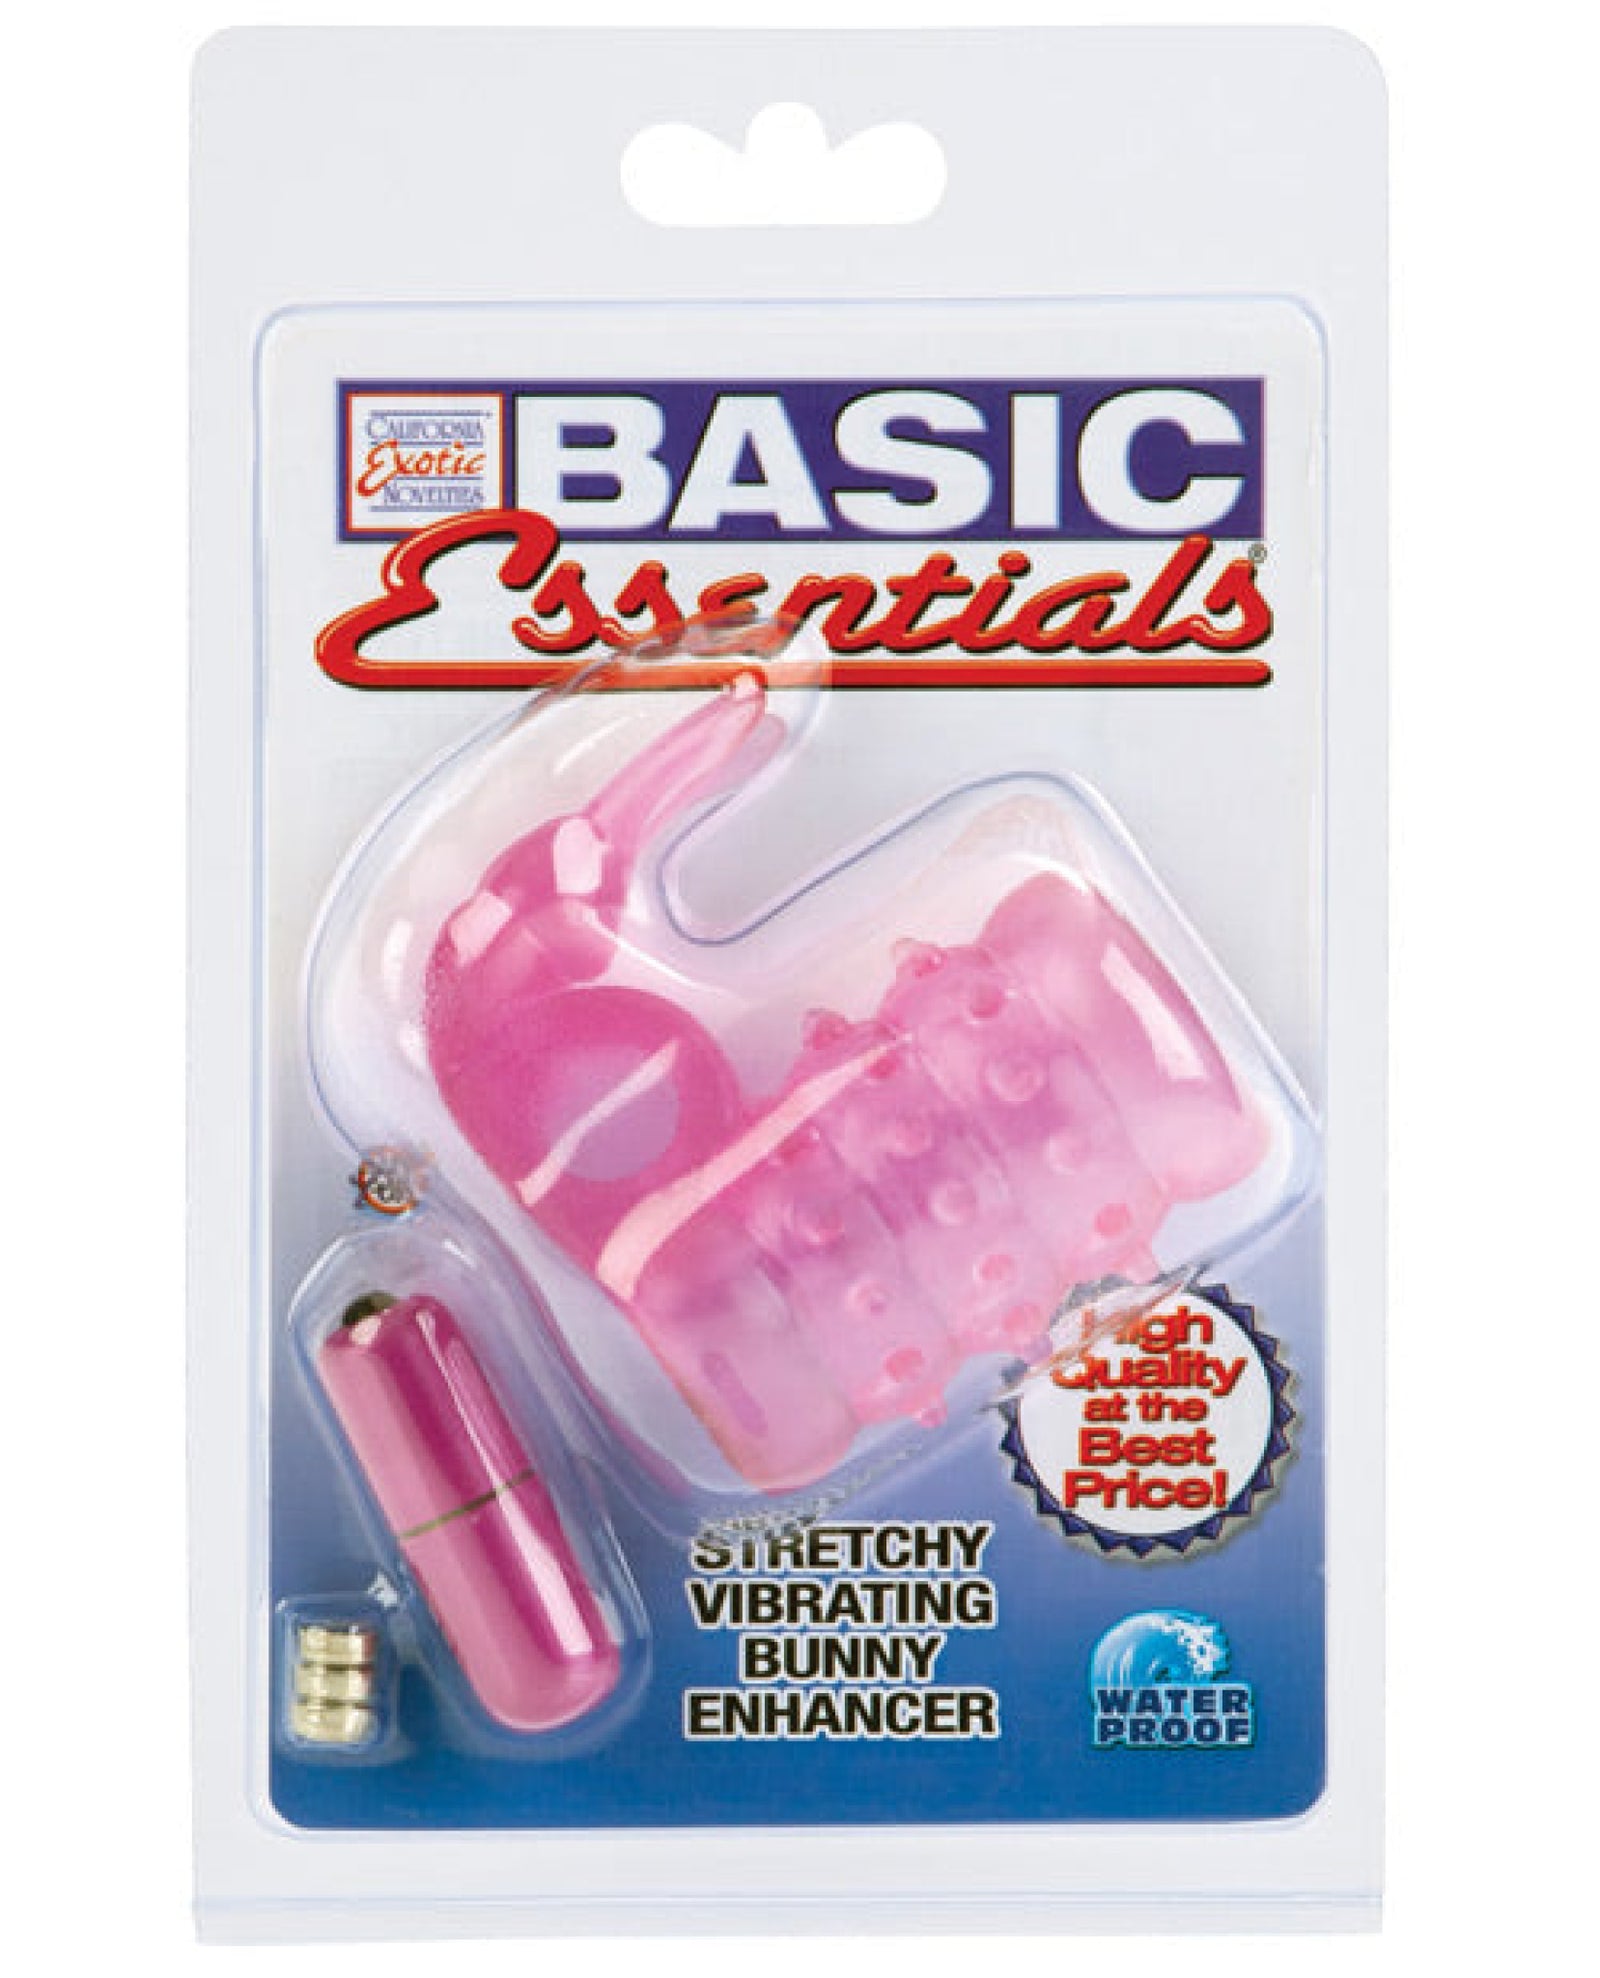 Basic Essentials Stretchy Vibrating Bunny Enhancer - Pink California Exotic Novelties